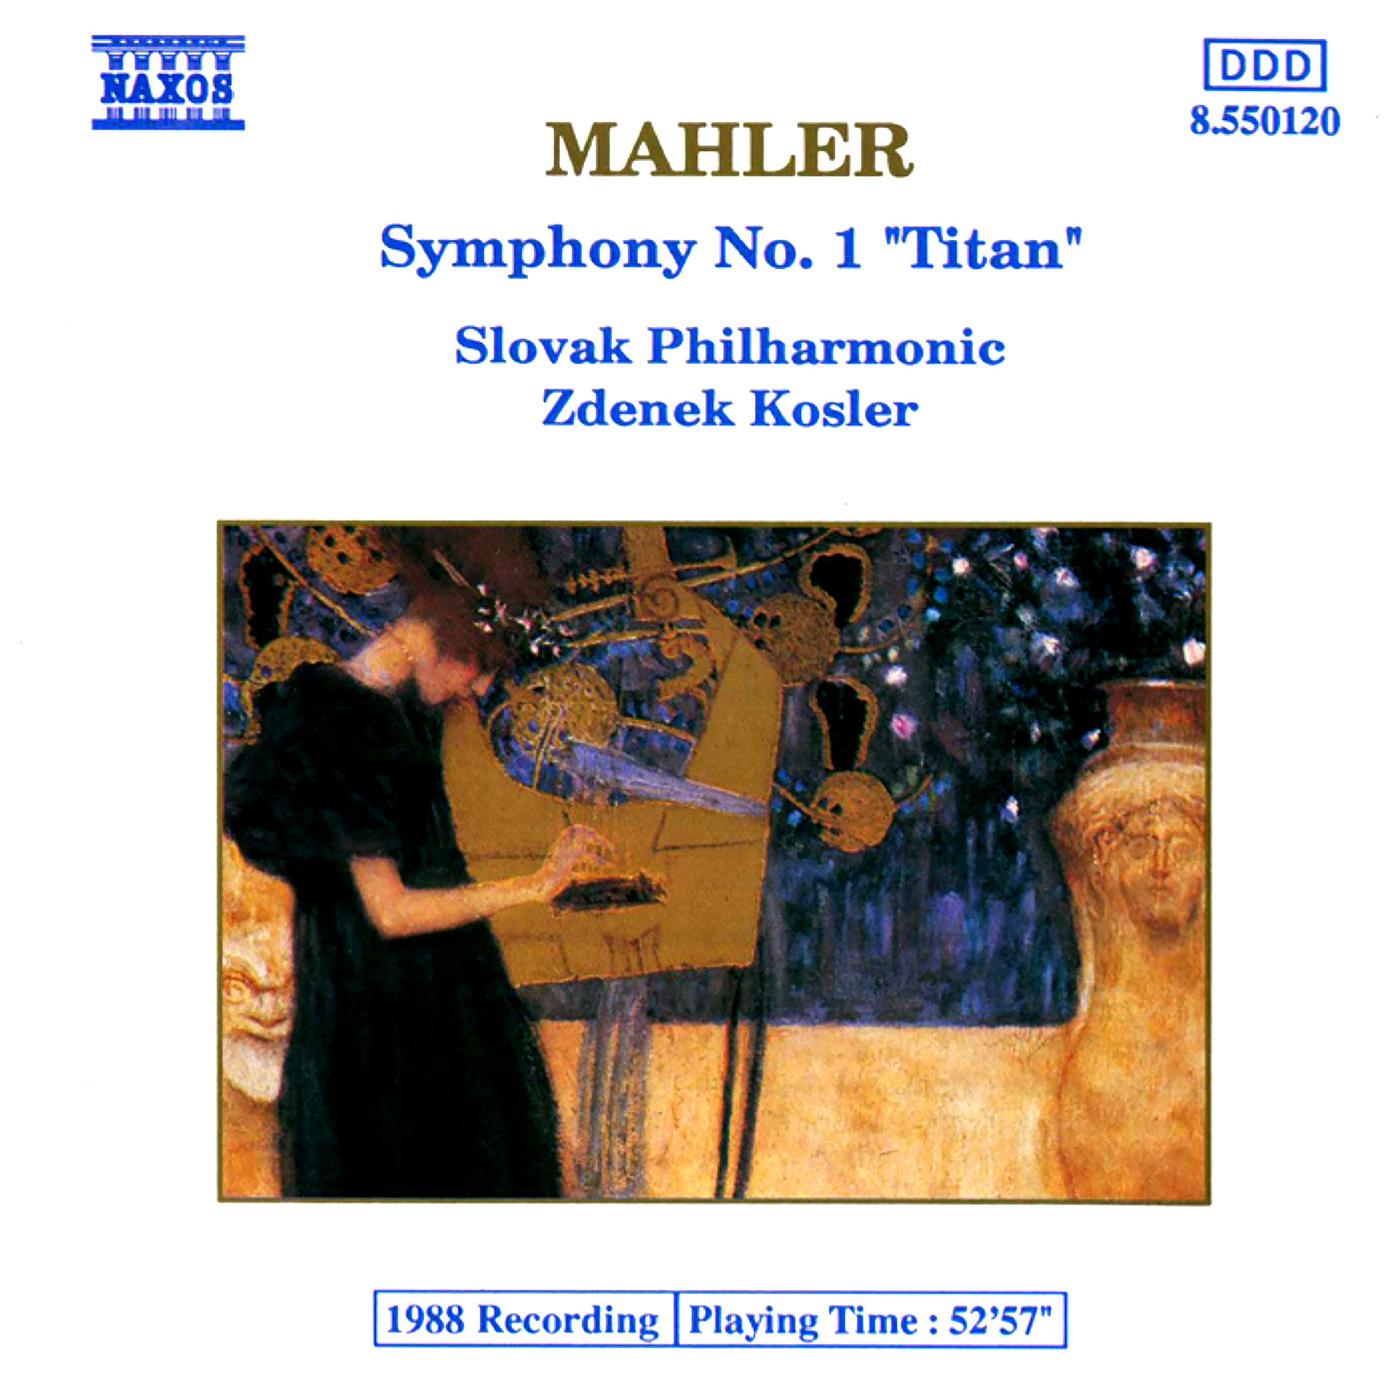 MAHLER, G.: Symphony No. 1, "Titan" (Slovak Philharmonic, Kosler)